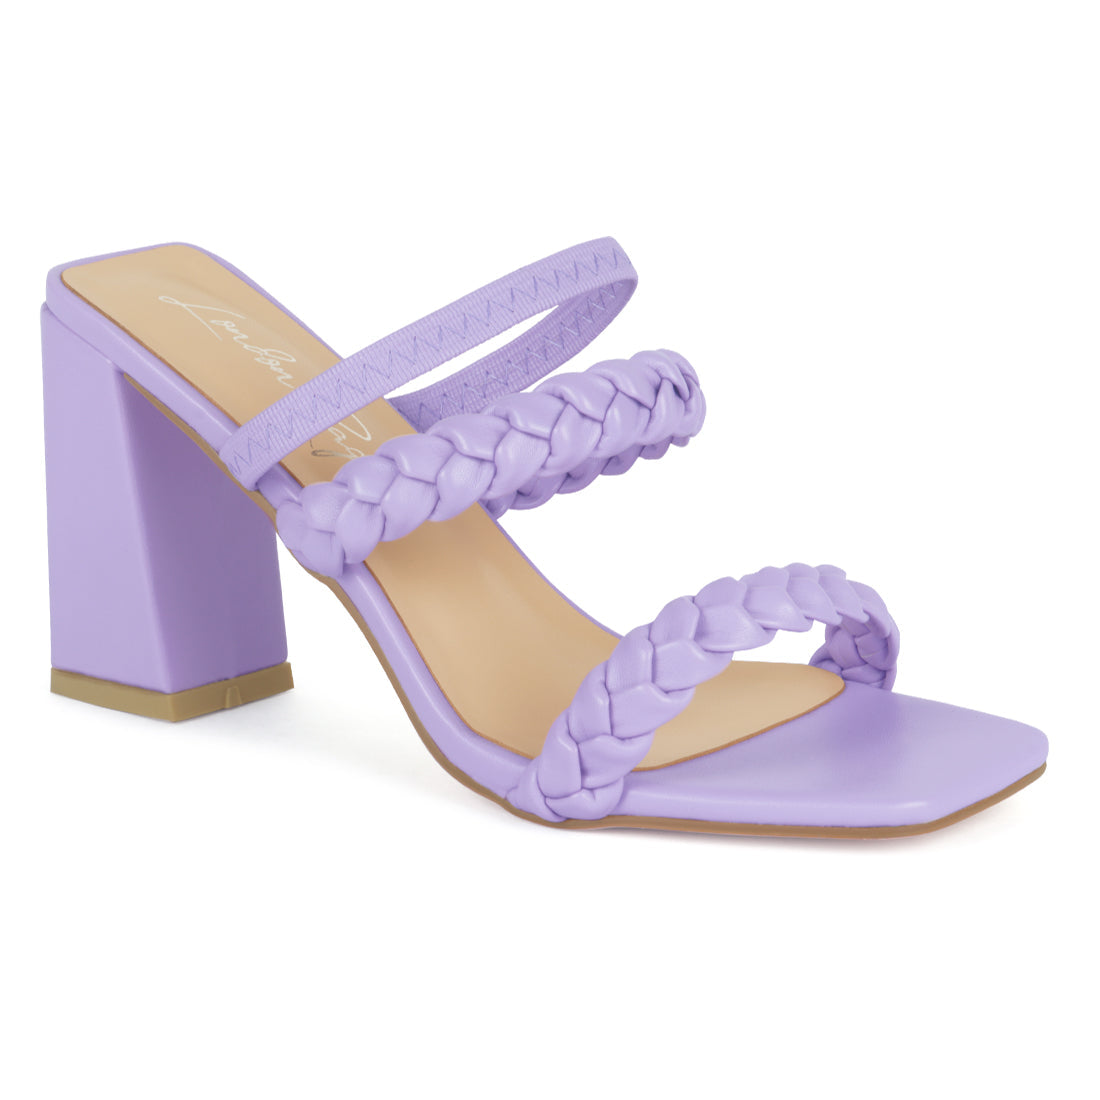 Woven Strap Casual Block Sandals - Purple